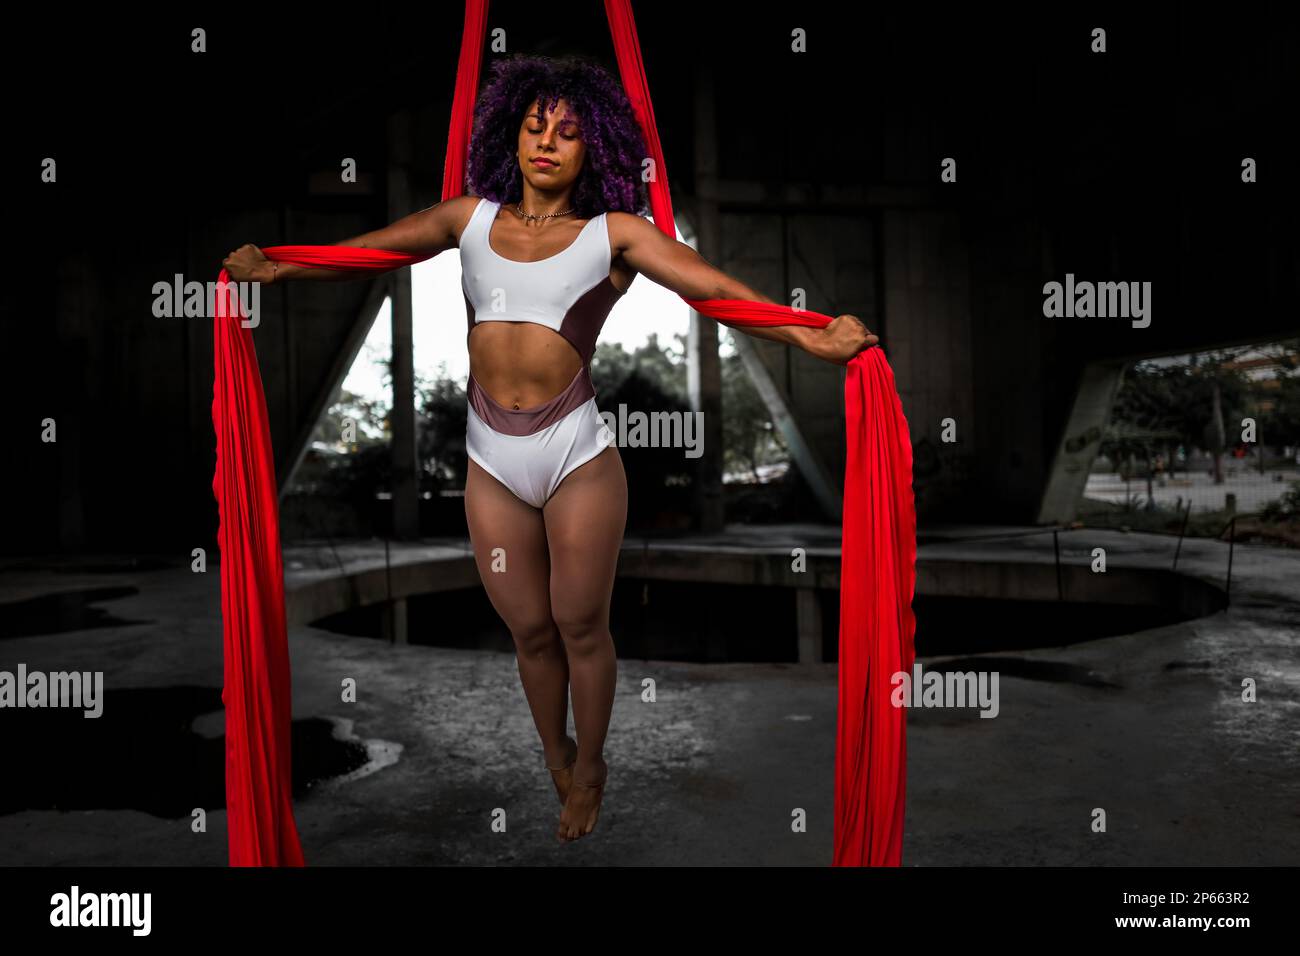 Mariale Contreras, ballerina aerea venezuelana, si esibisce su sete aeree durante una performance artistica in uno spazio industriale a Barranquilla, Colombia. Foto Stock